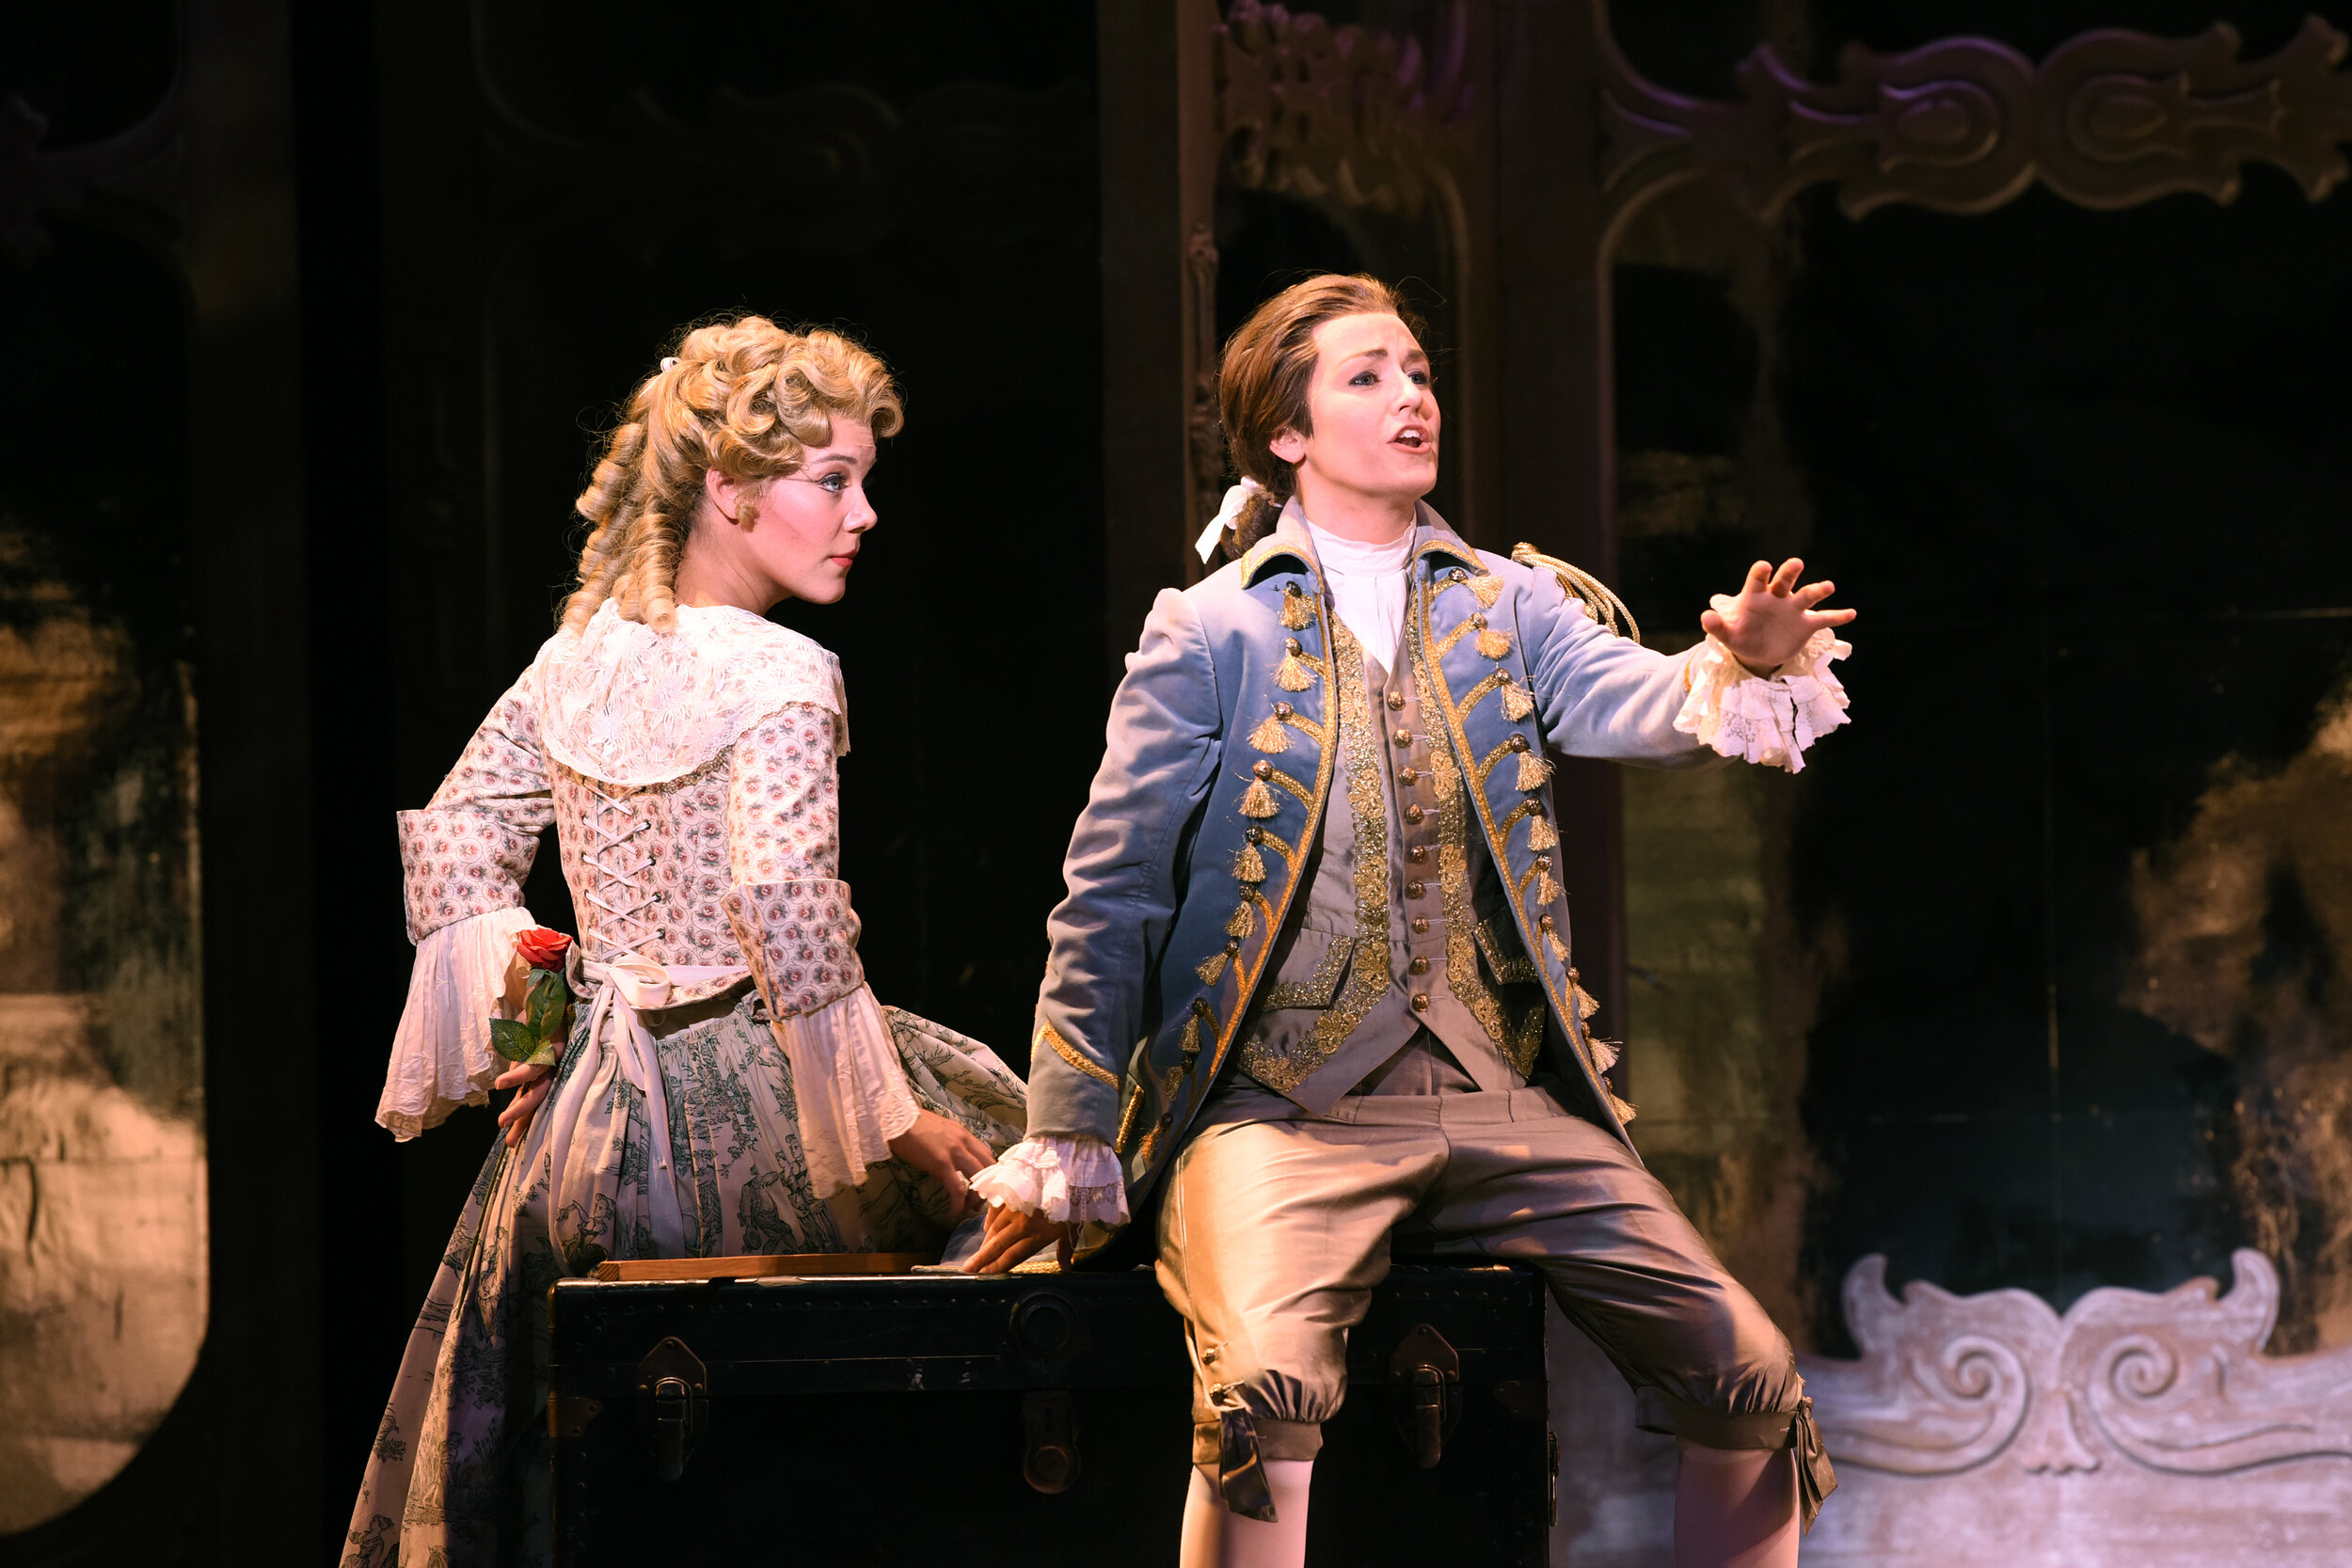  Katherine Beck as Cherubino in  The Marriage of Figaro  at Arizona Opera. Photo by Tim Trumble. 